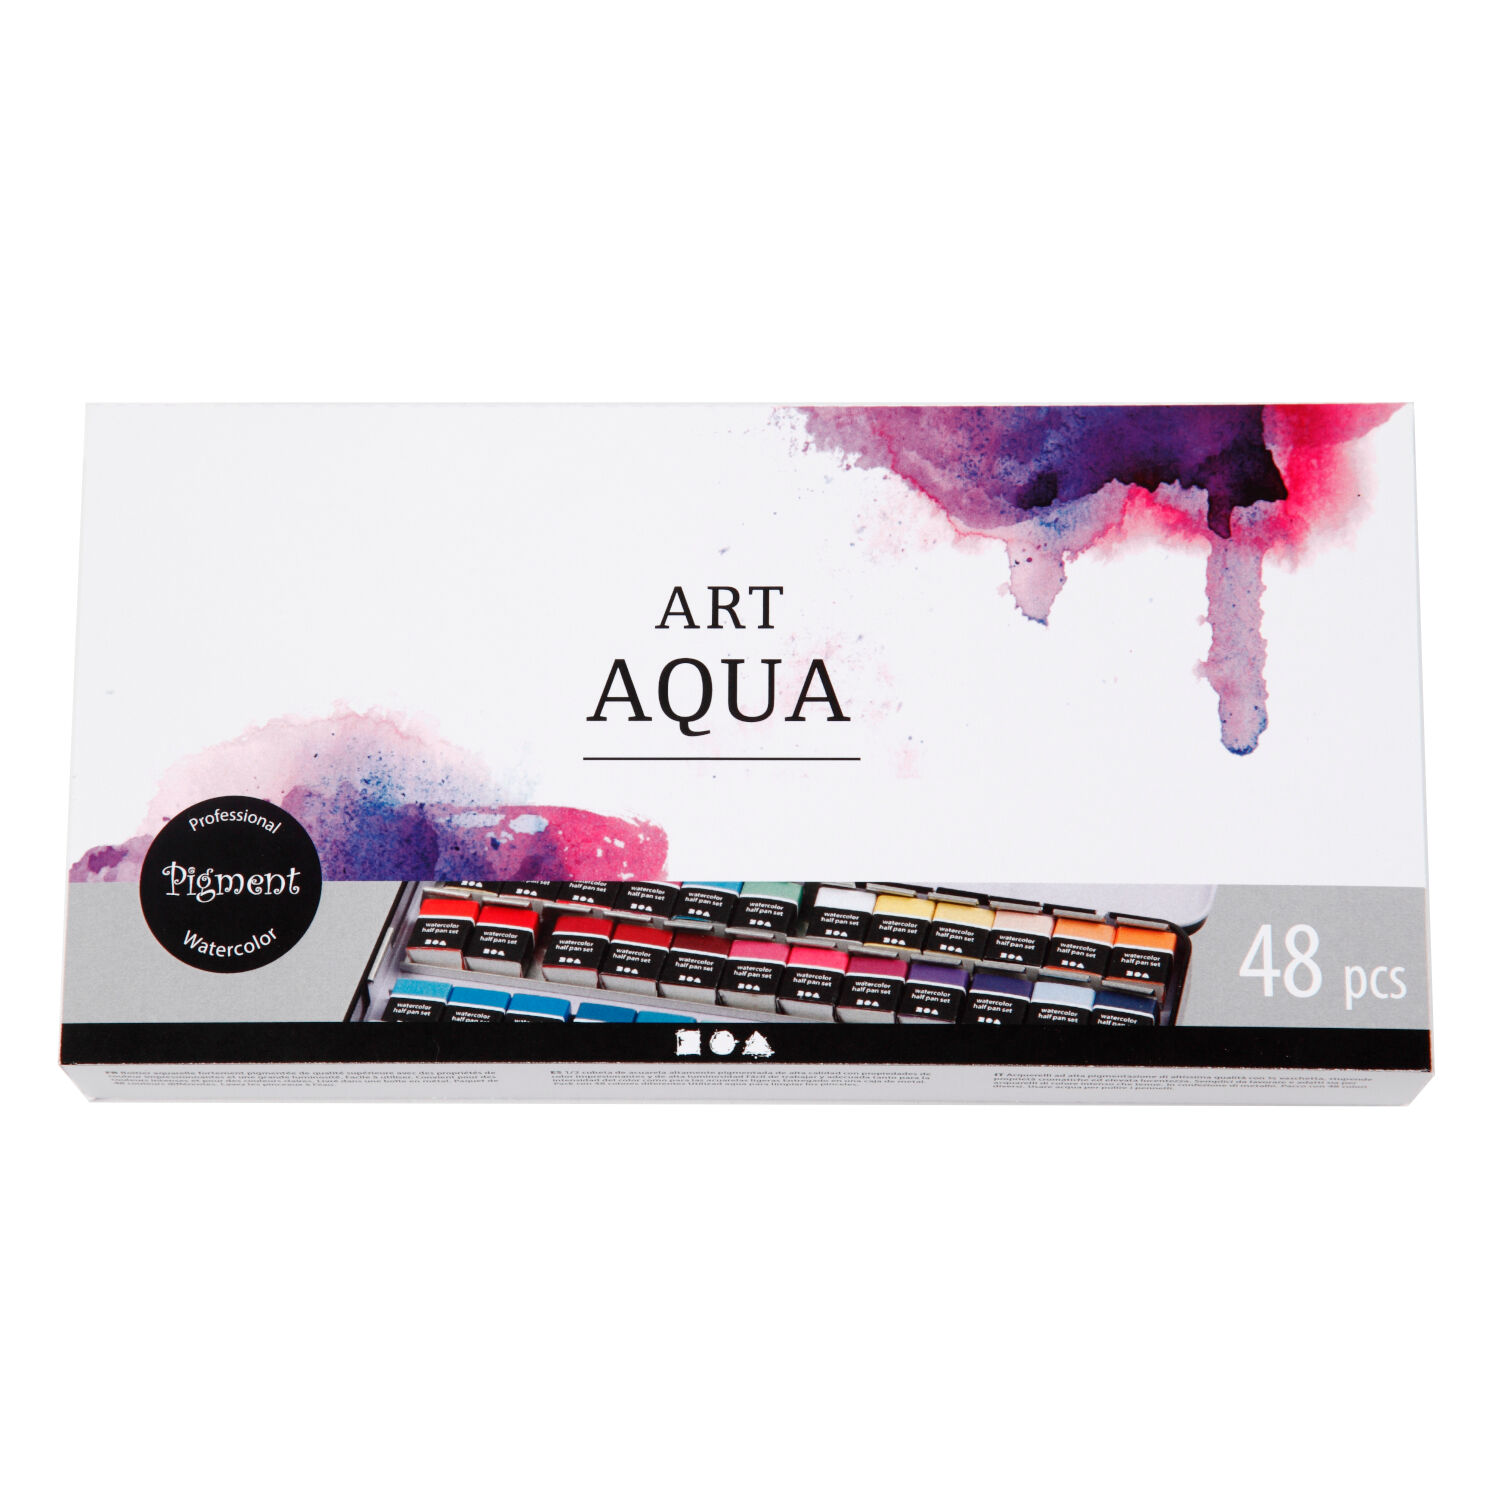 NEU Aquarellkasten Metall, Art Aqua Standard-Farben, gefllt mit 48x 1/2 Npfchen Bild 2